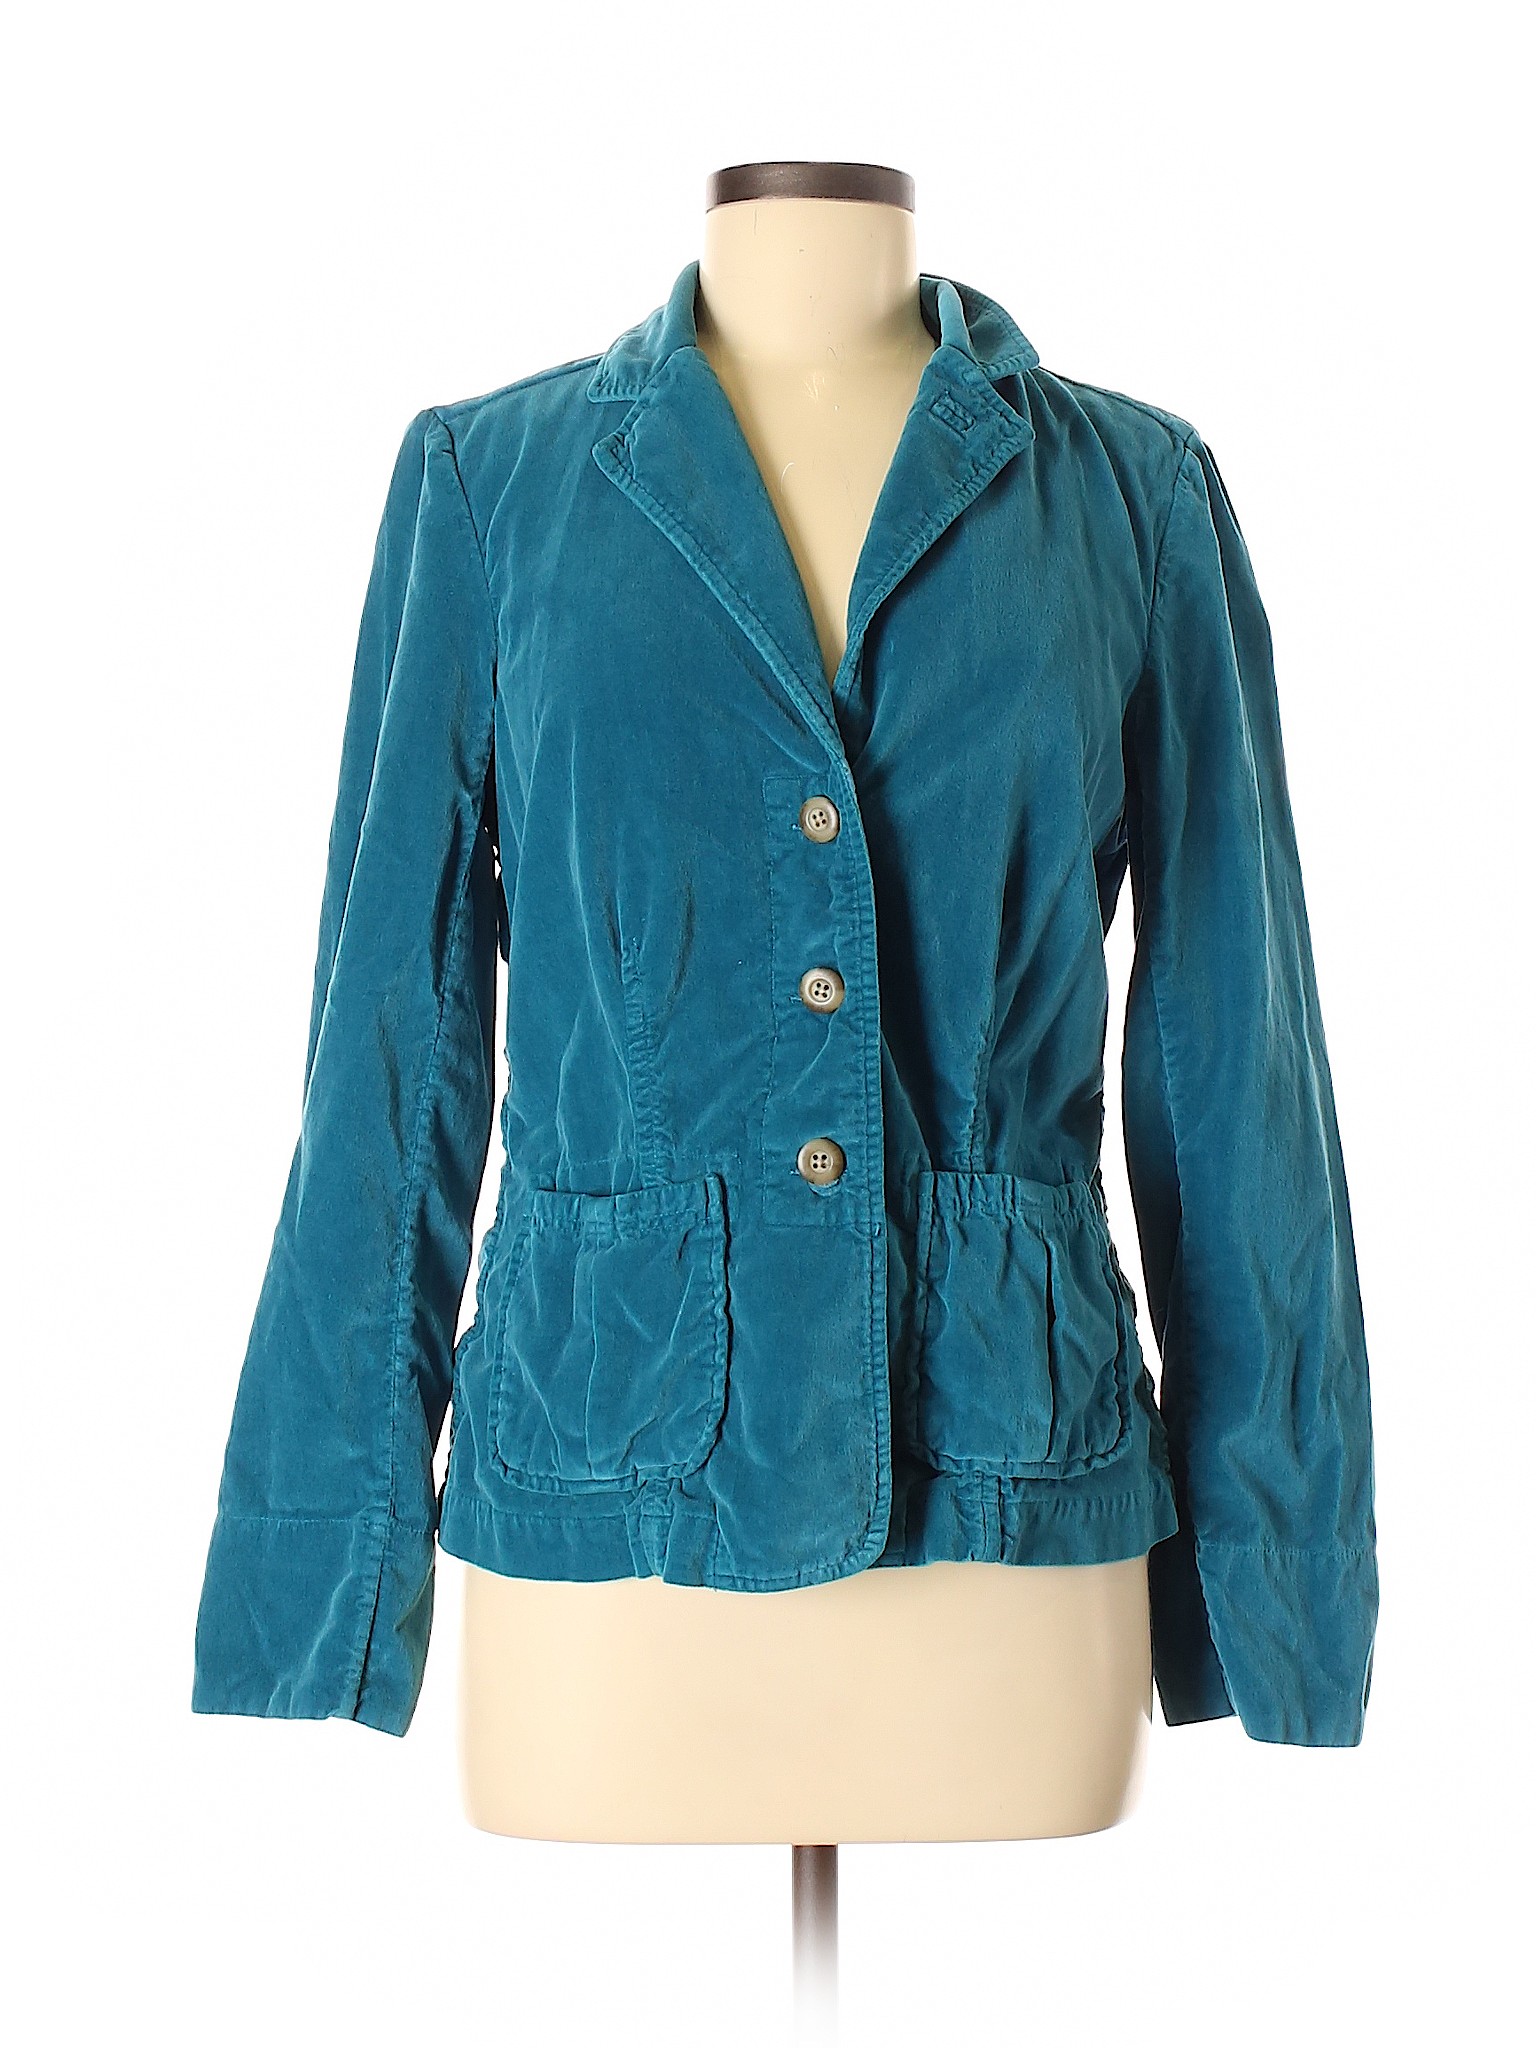 Sundance 100% Cotton Solid Teal Blue Blazer Size M - 77% off | thredUP